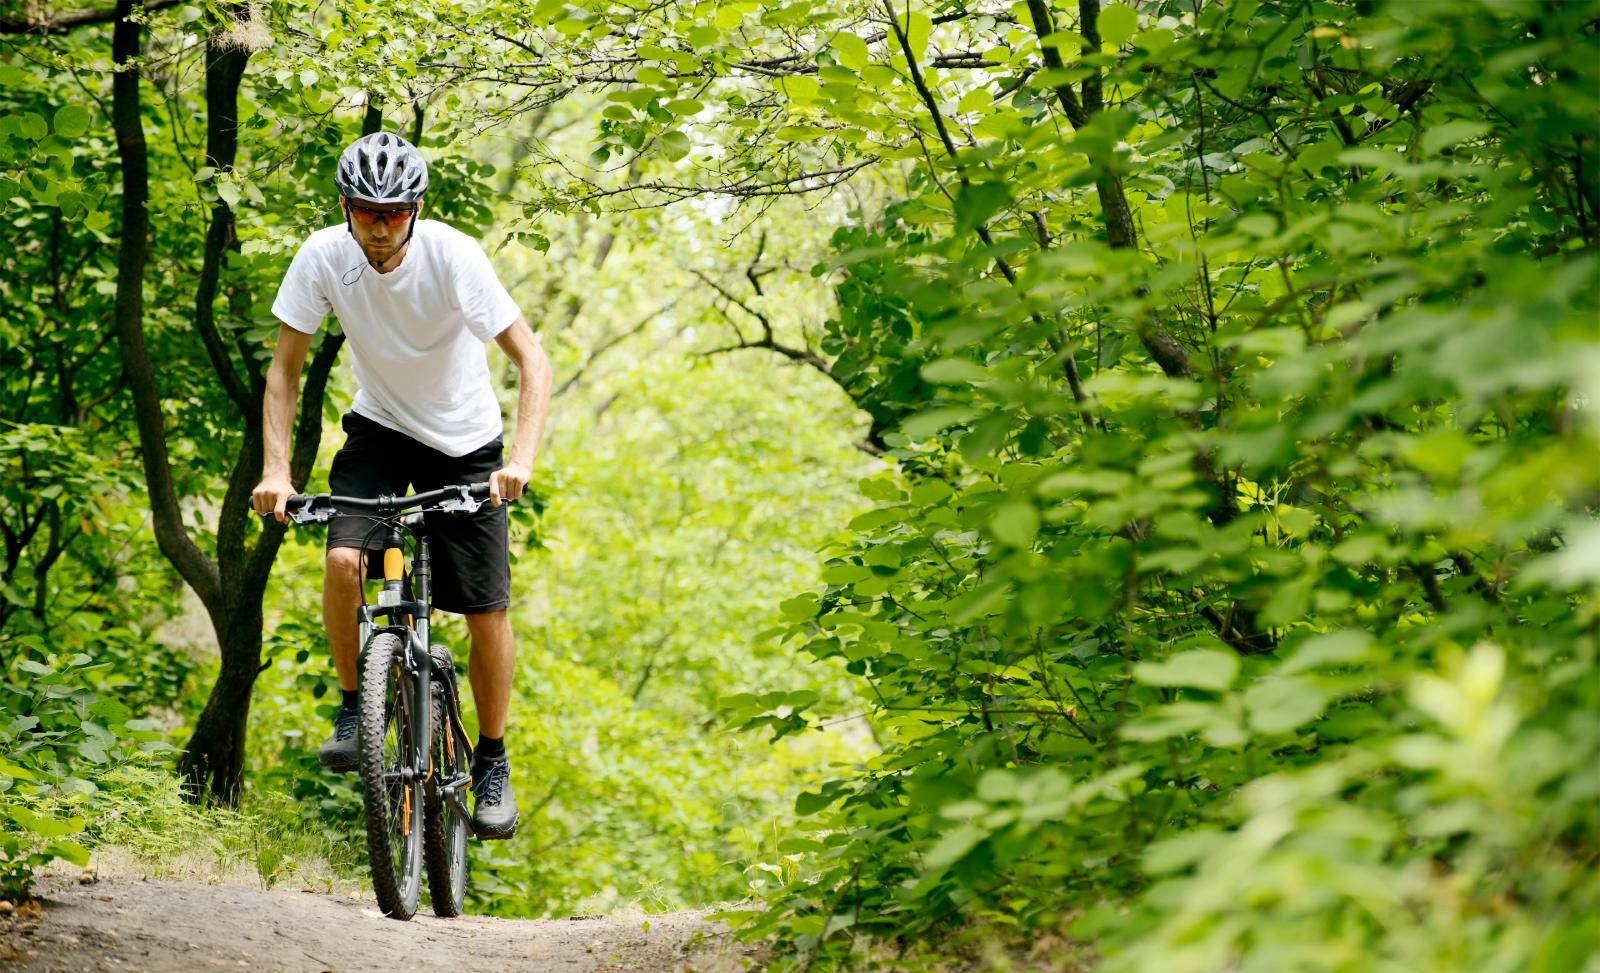 A man rides a bike in the woods while wearing a helmet - Trek Bicycle helmet